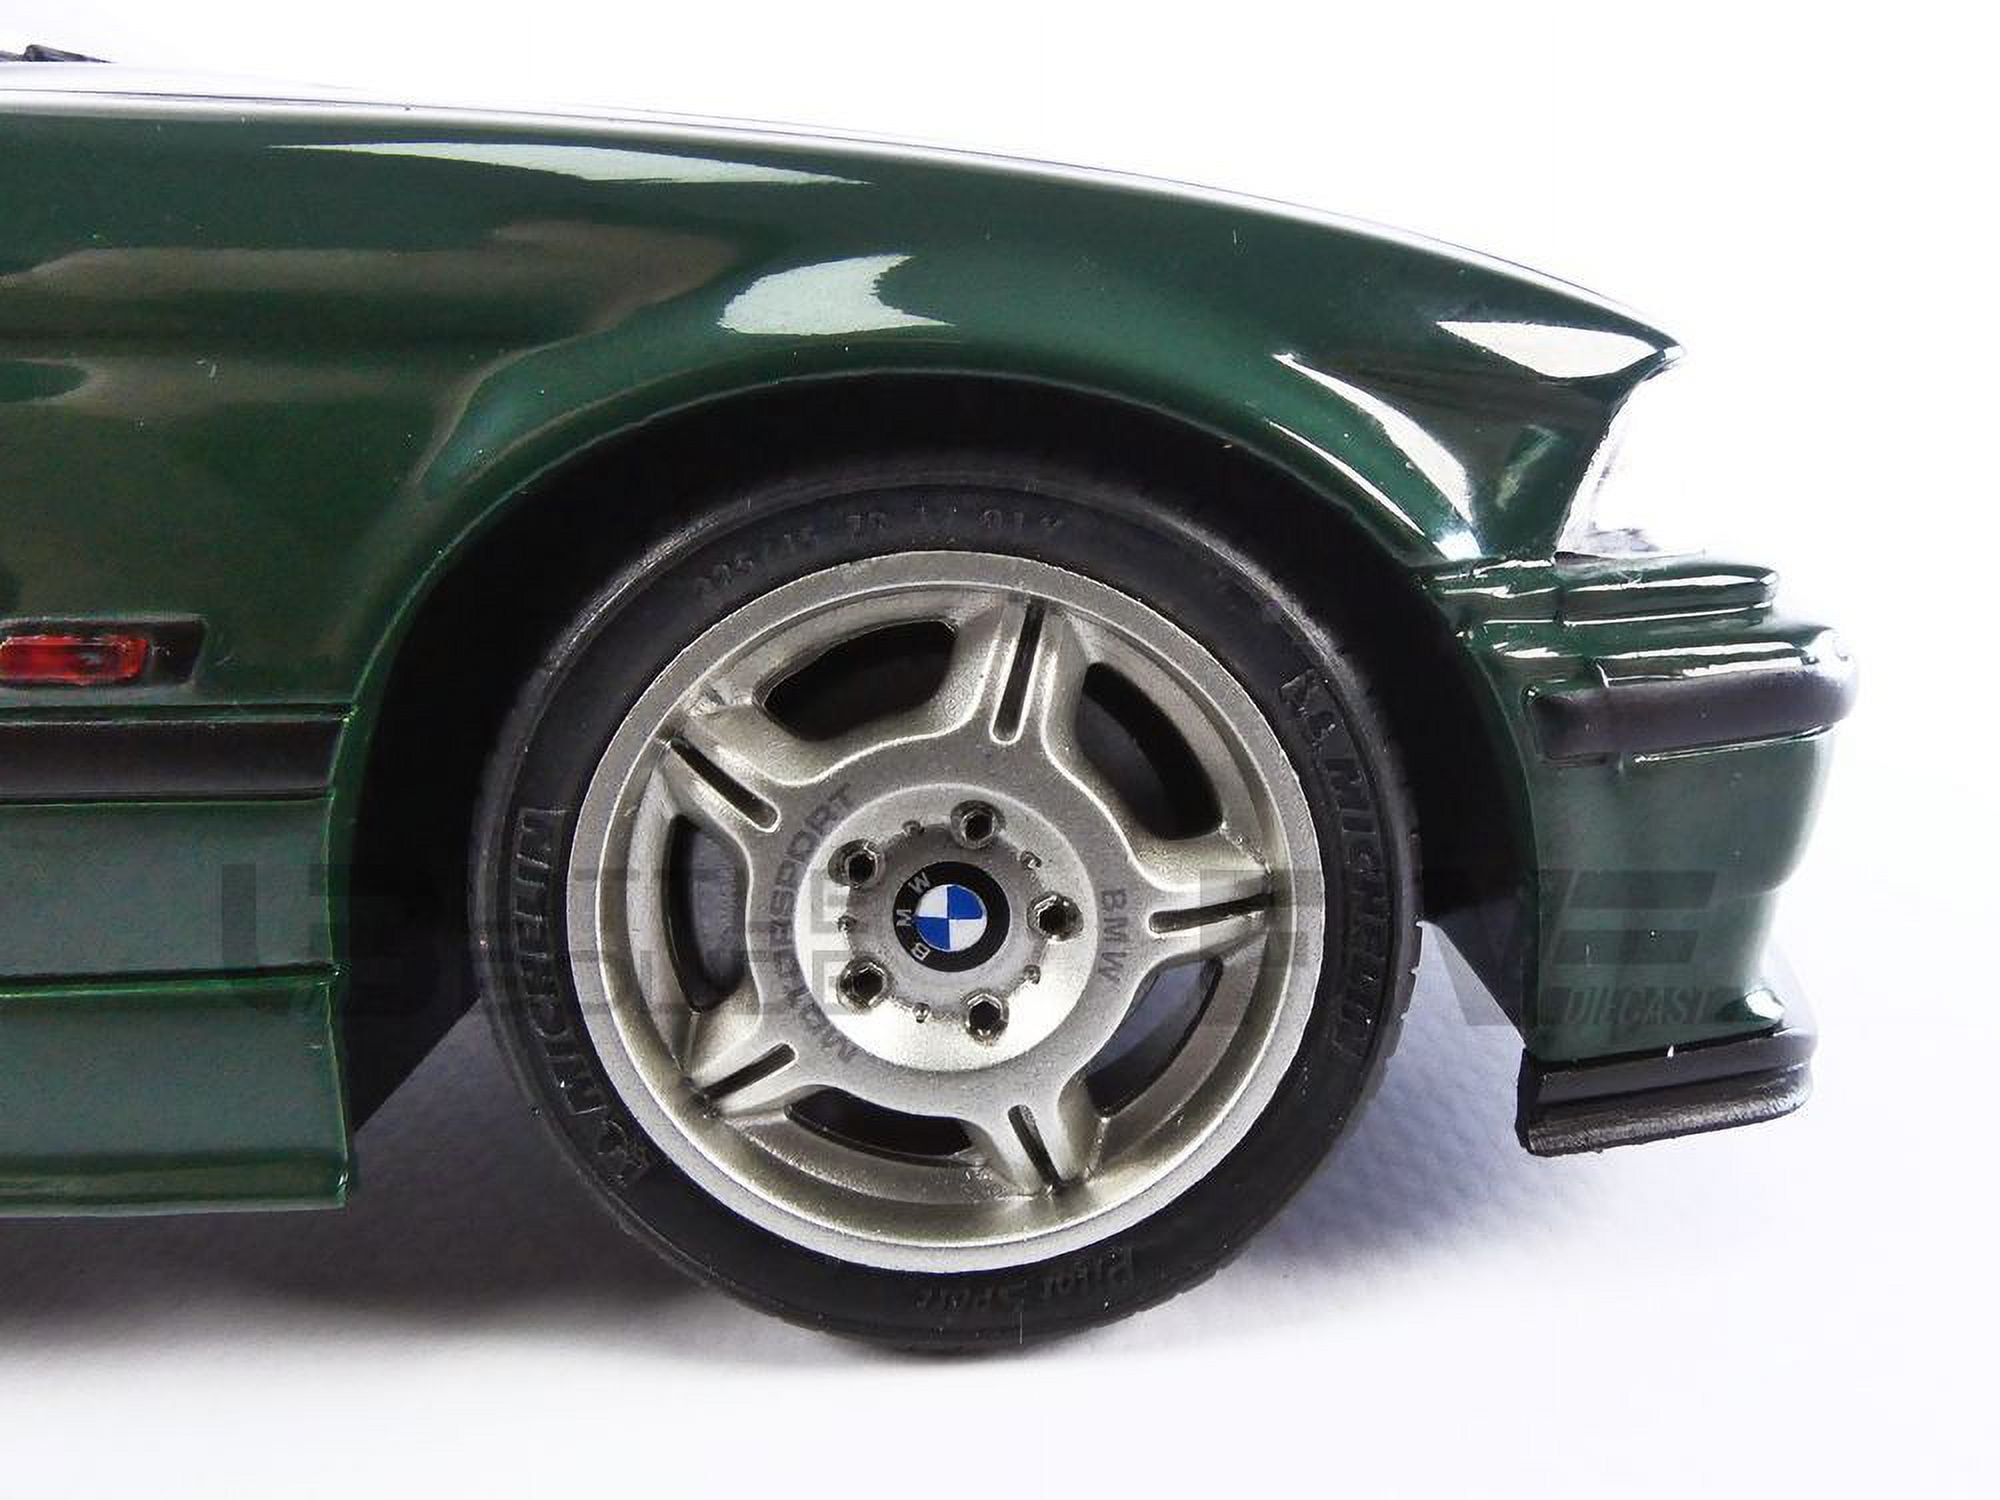 1995 BMW M3 E36 GT 1:18 Solido diecast scale model